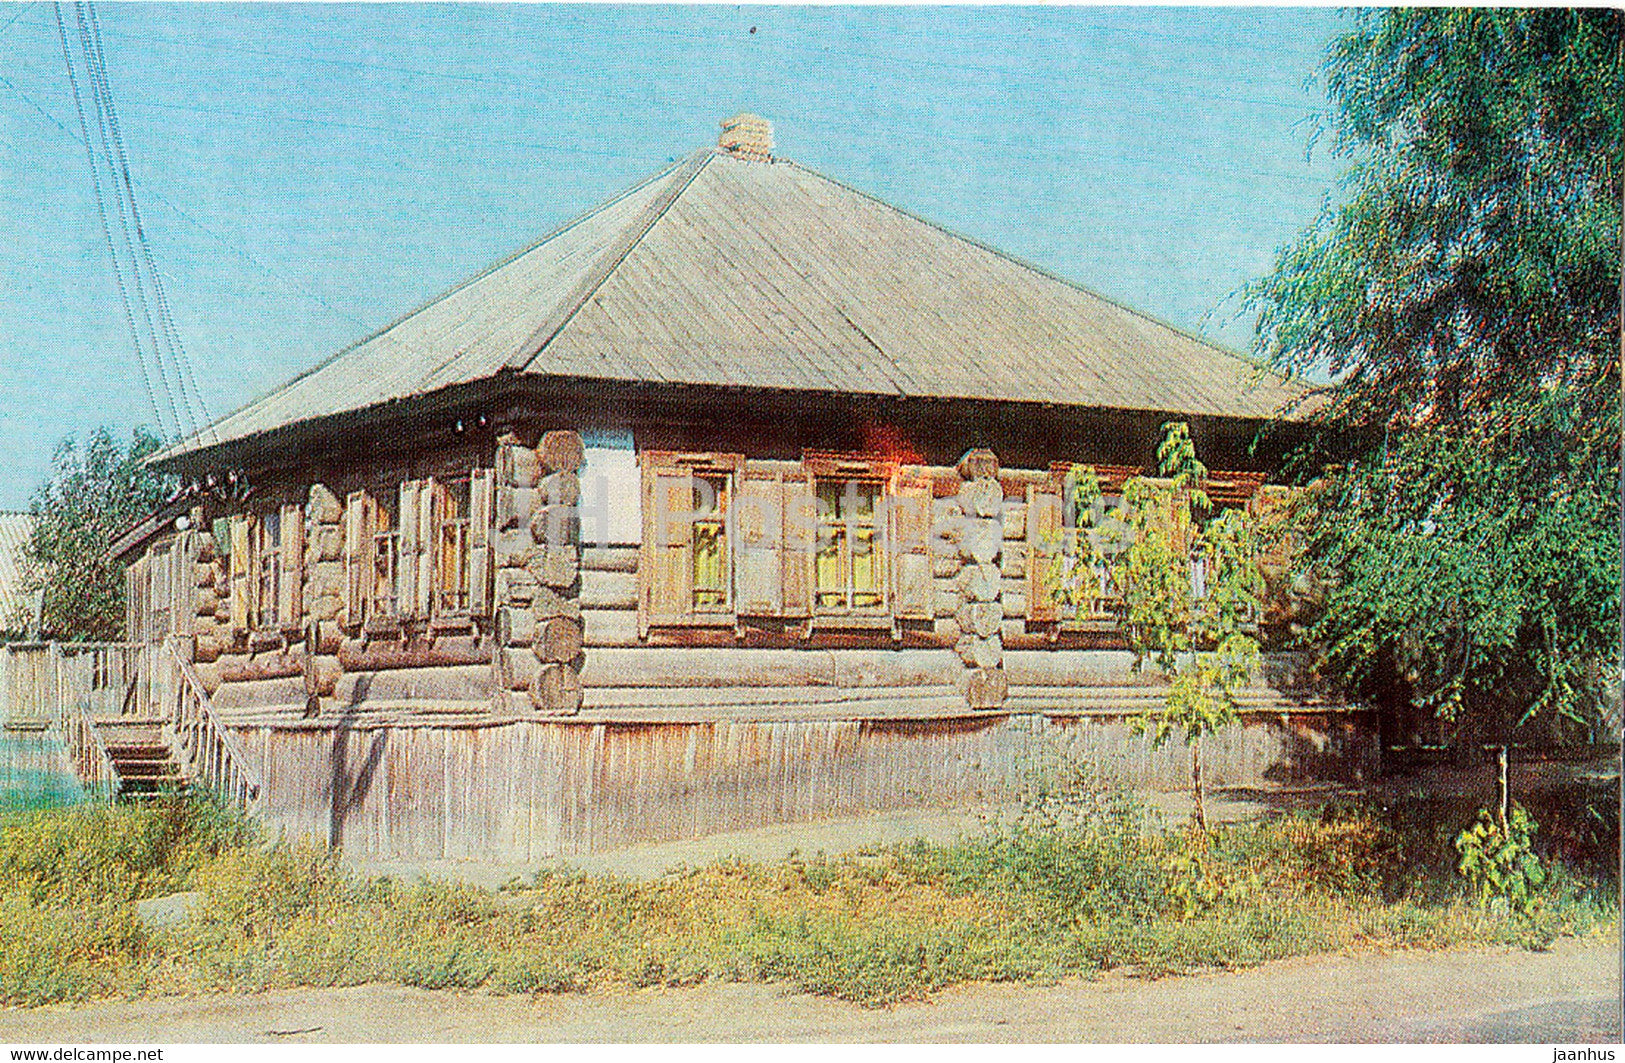 Uralsk - Oral - house of Yemelyan Pugachev - 1984 - Kazakhstan USSR - unused - JH Postcards